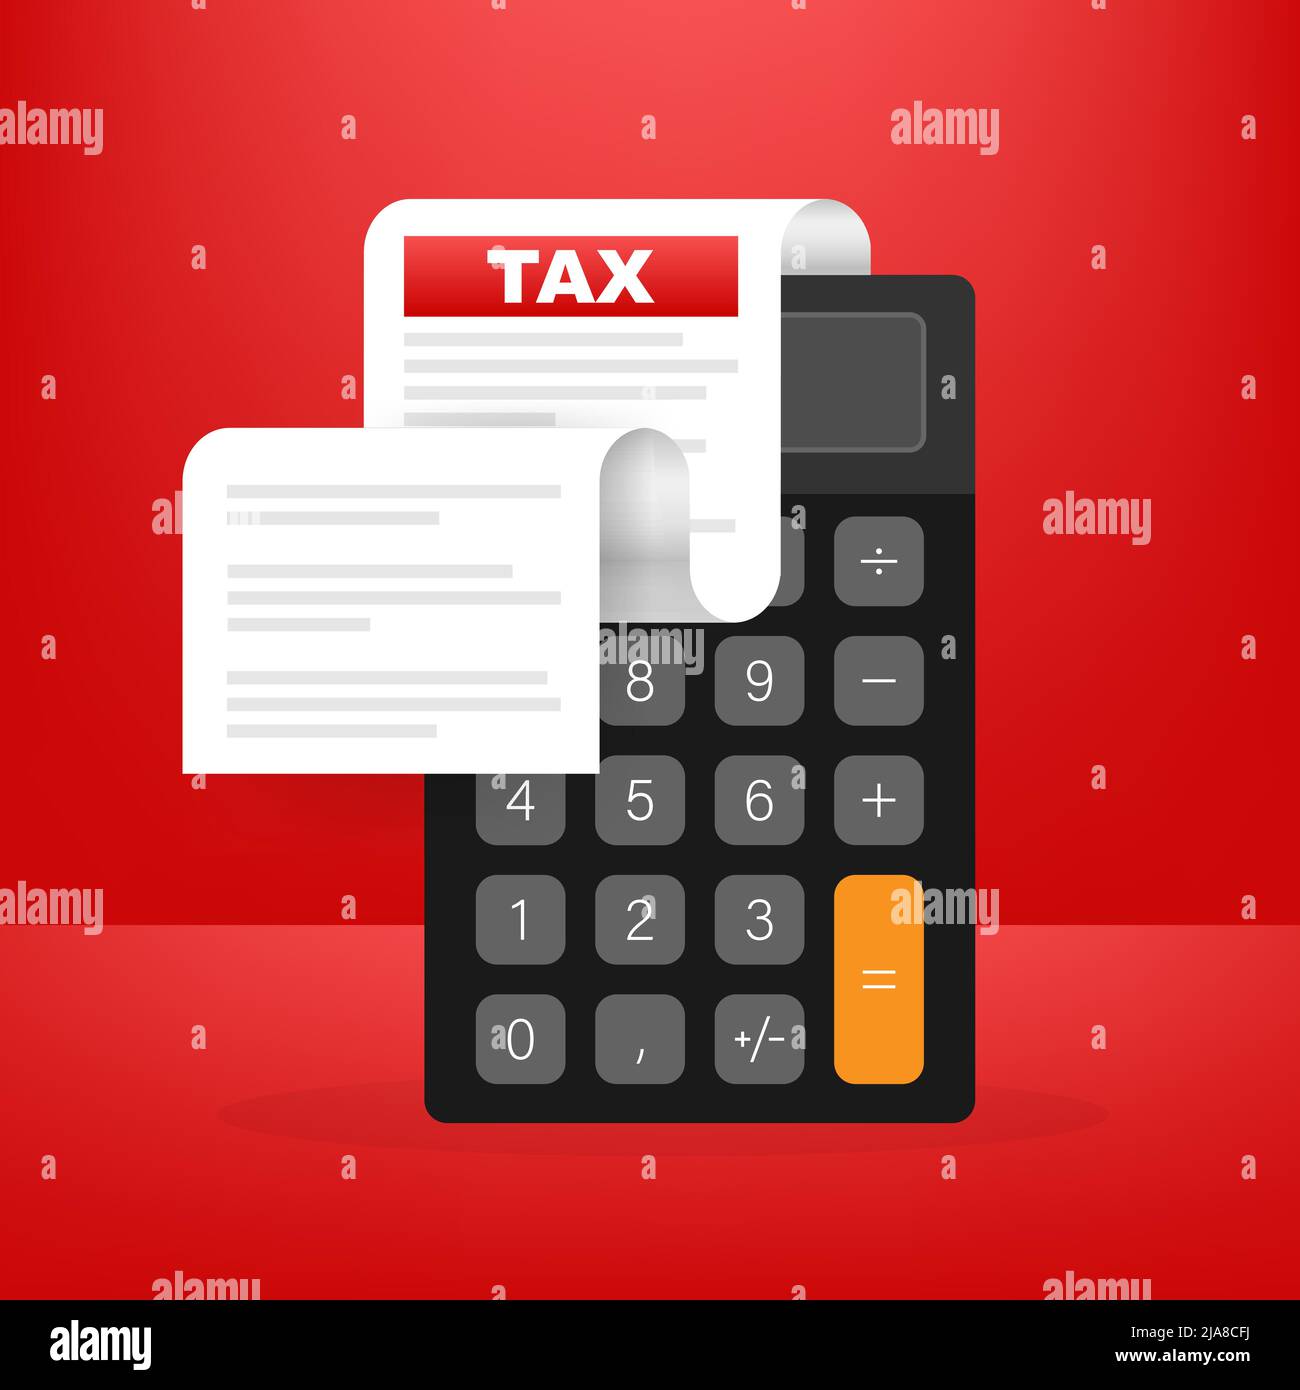 Steuerbeleg in flacher Form. Flache Vektorgrafik. Online-Steuerzahlung. Stock Vektor